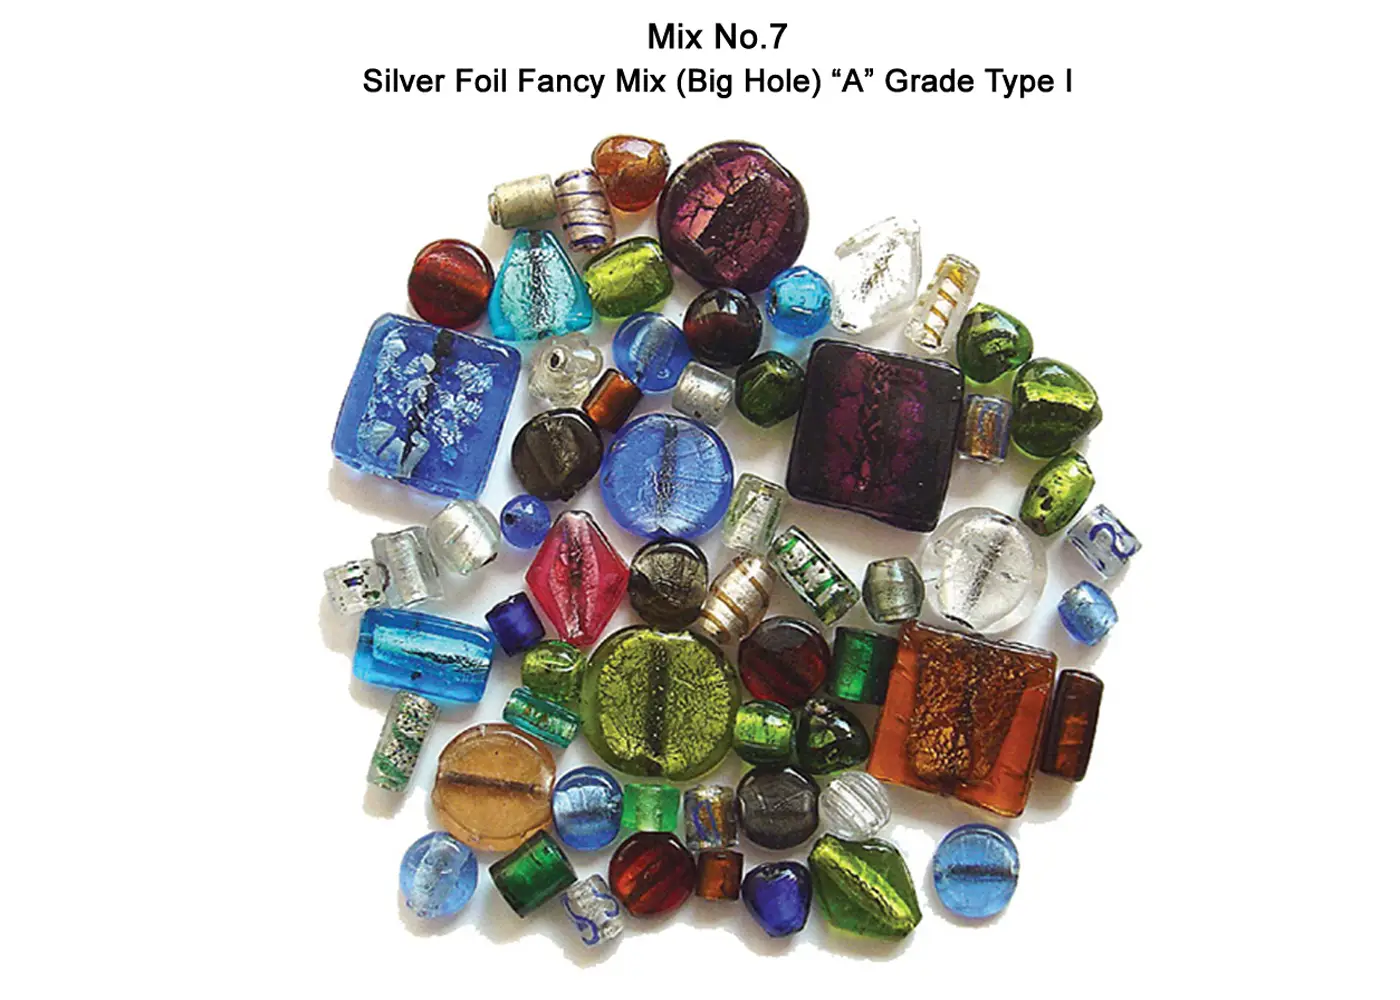 Silver Foil Fancy Mix (Big Hole) (A) Grade Type I